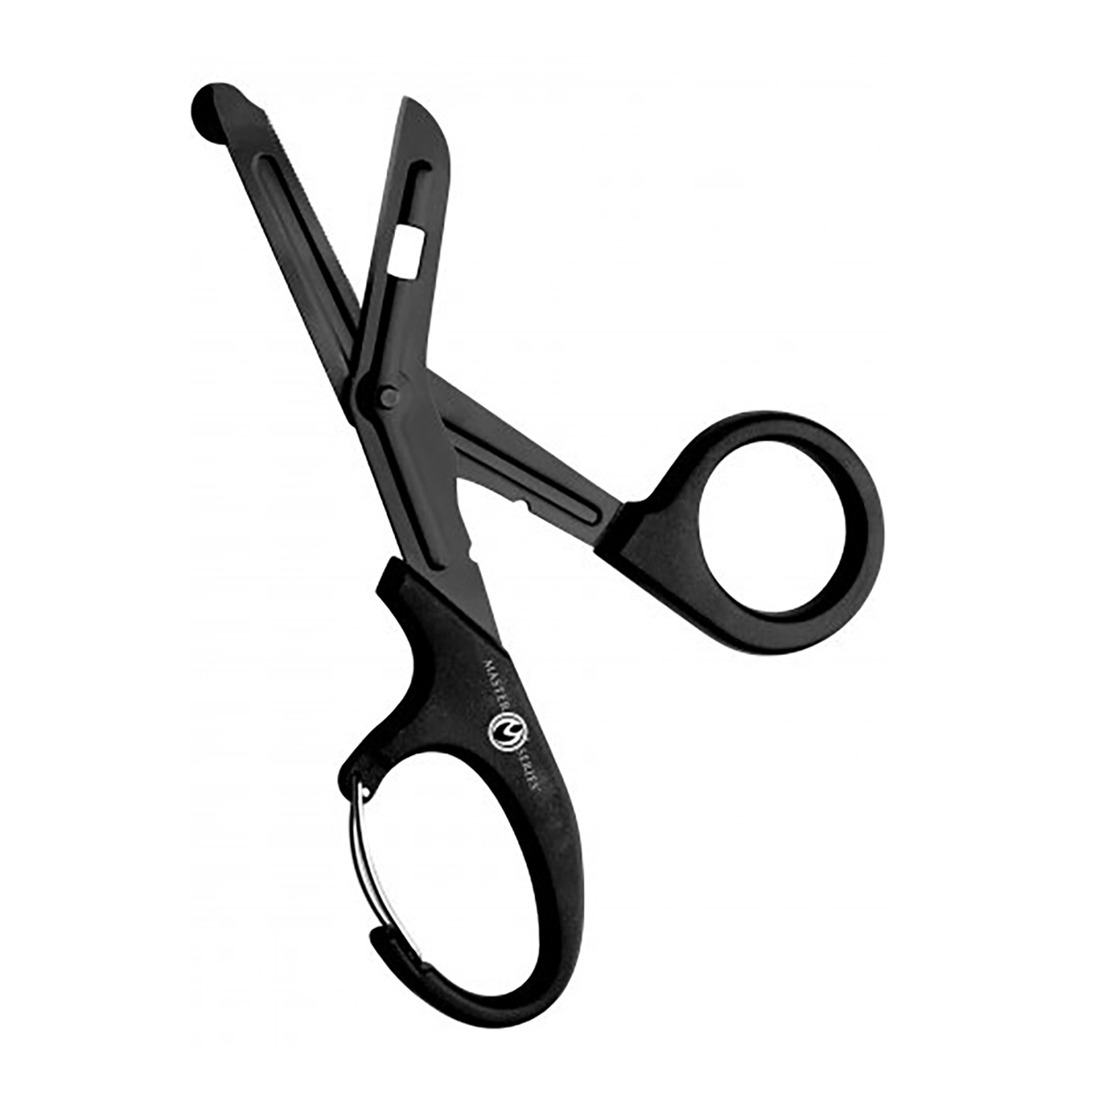 MS Snip Heavy Duty Bondage Scissors with Clip